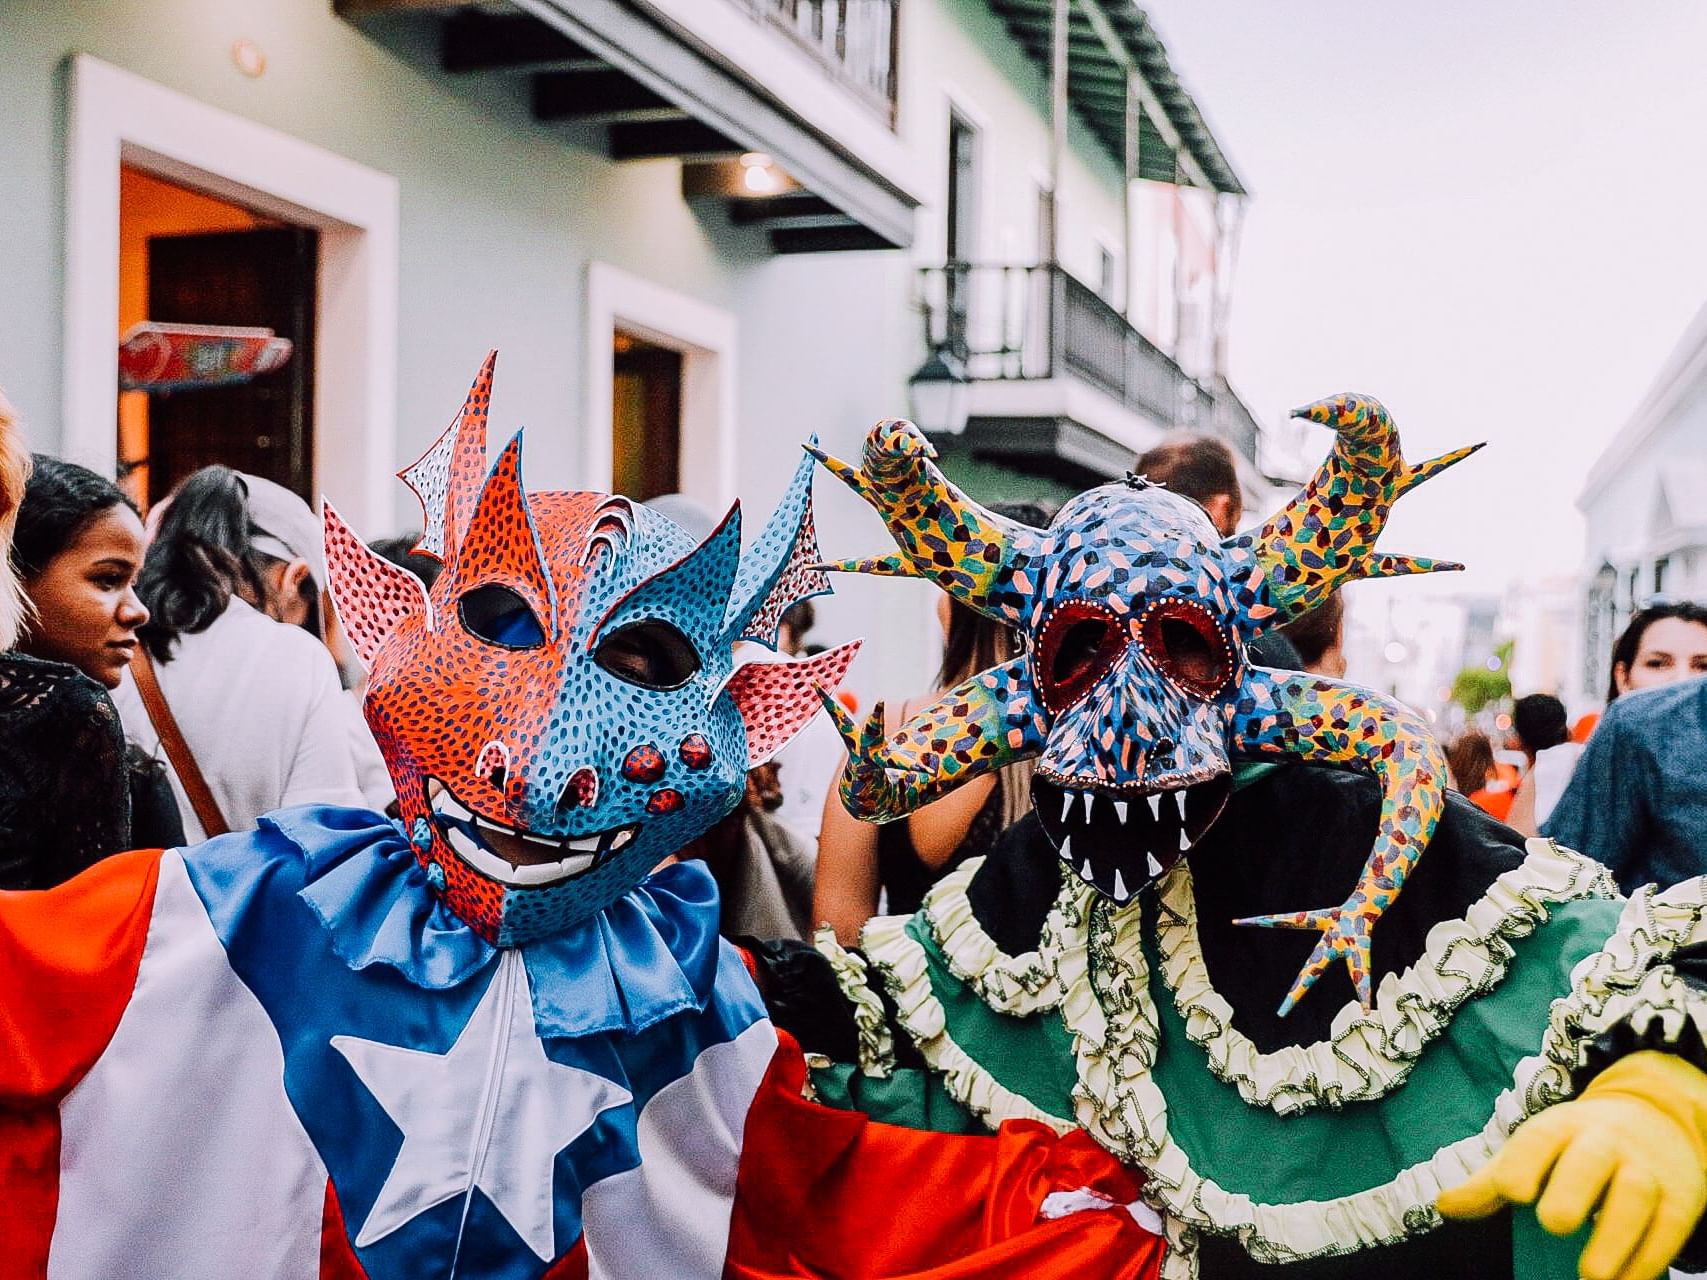 Puerto Rican Festival